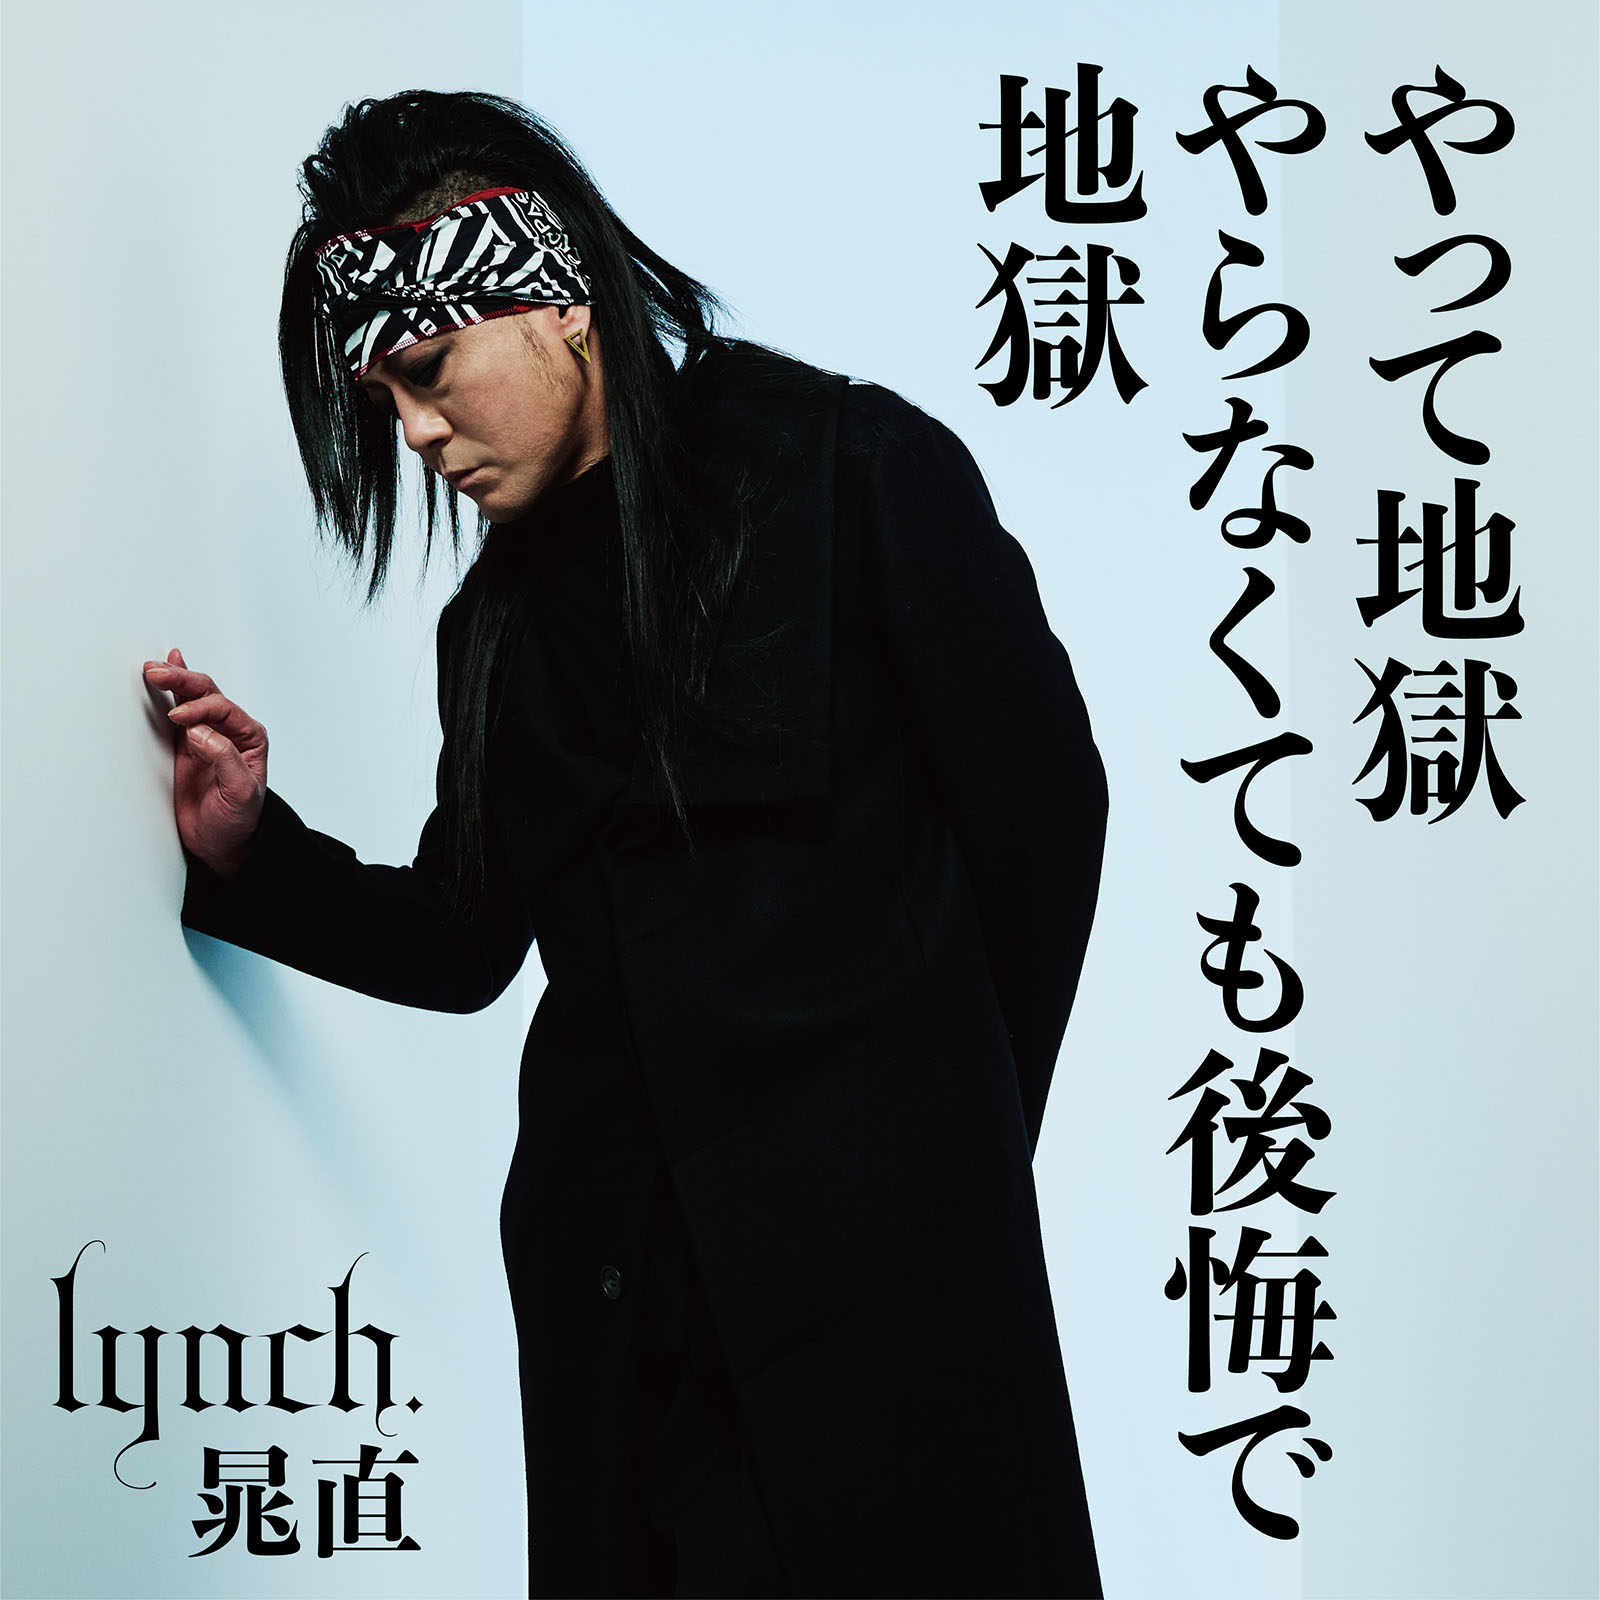 KING RECORDS Playlist | lynch.「REBORN」全曲解説